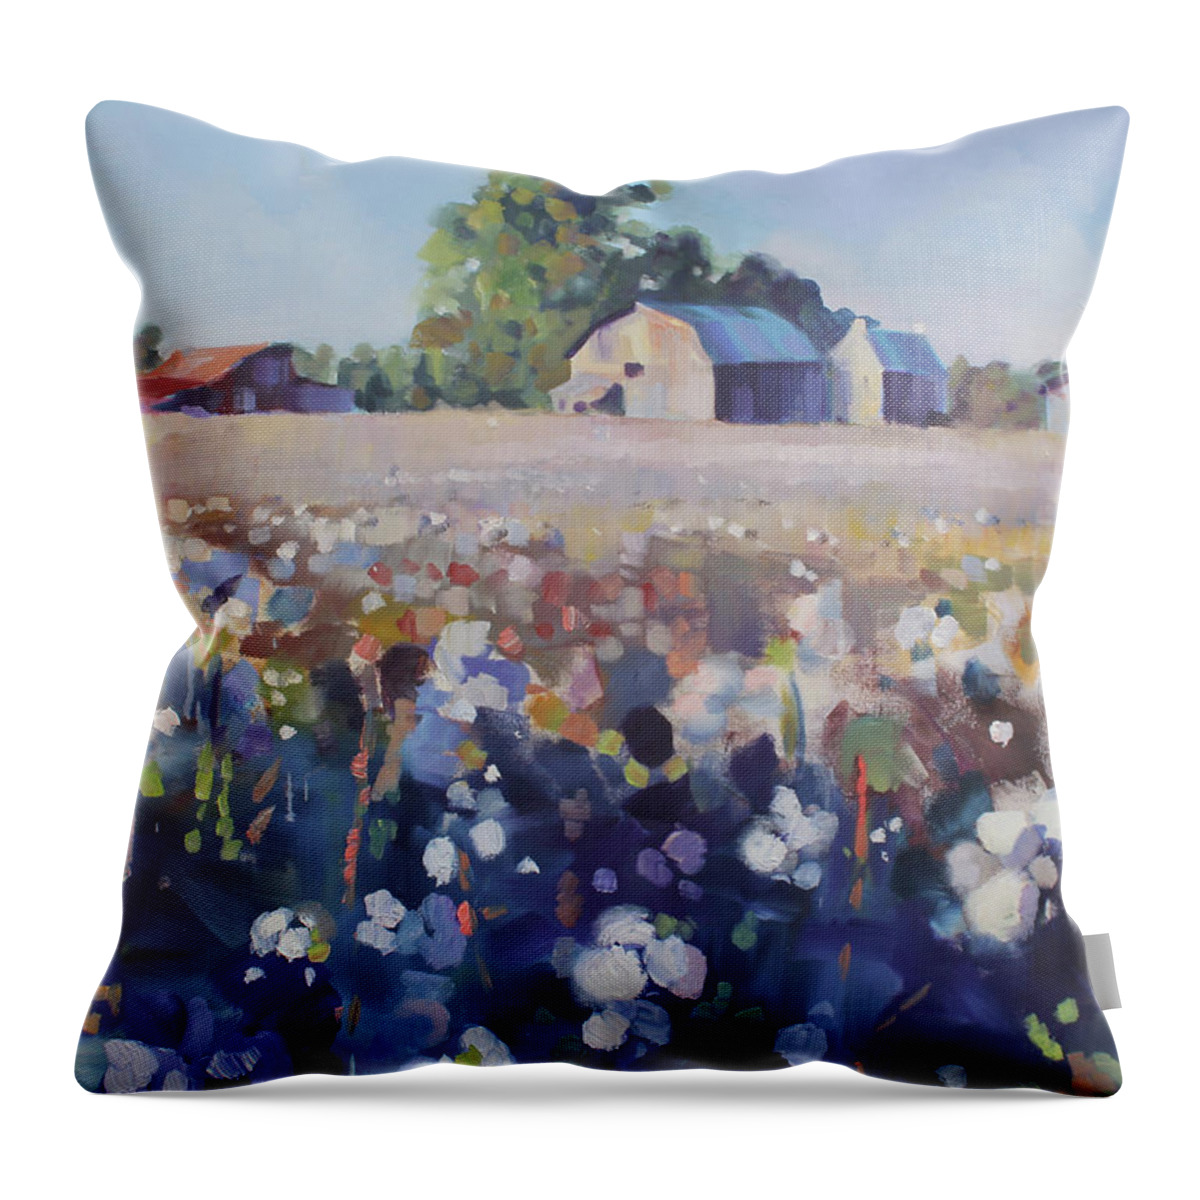 Cotton Throw Pillow featuring the painting Carolina Cotton II by Susan Bradbury